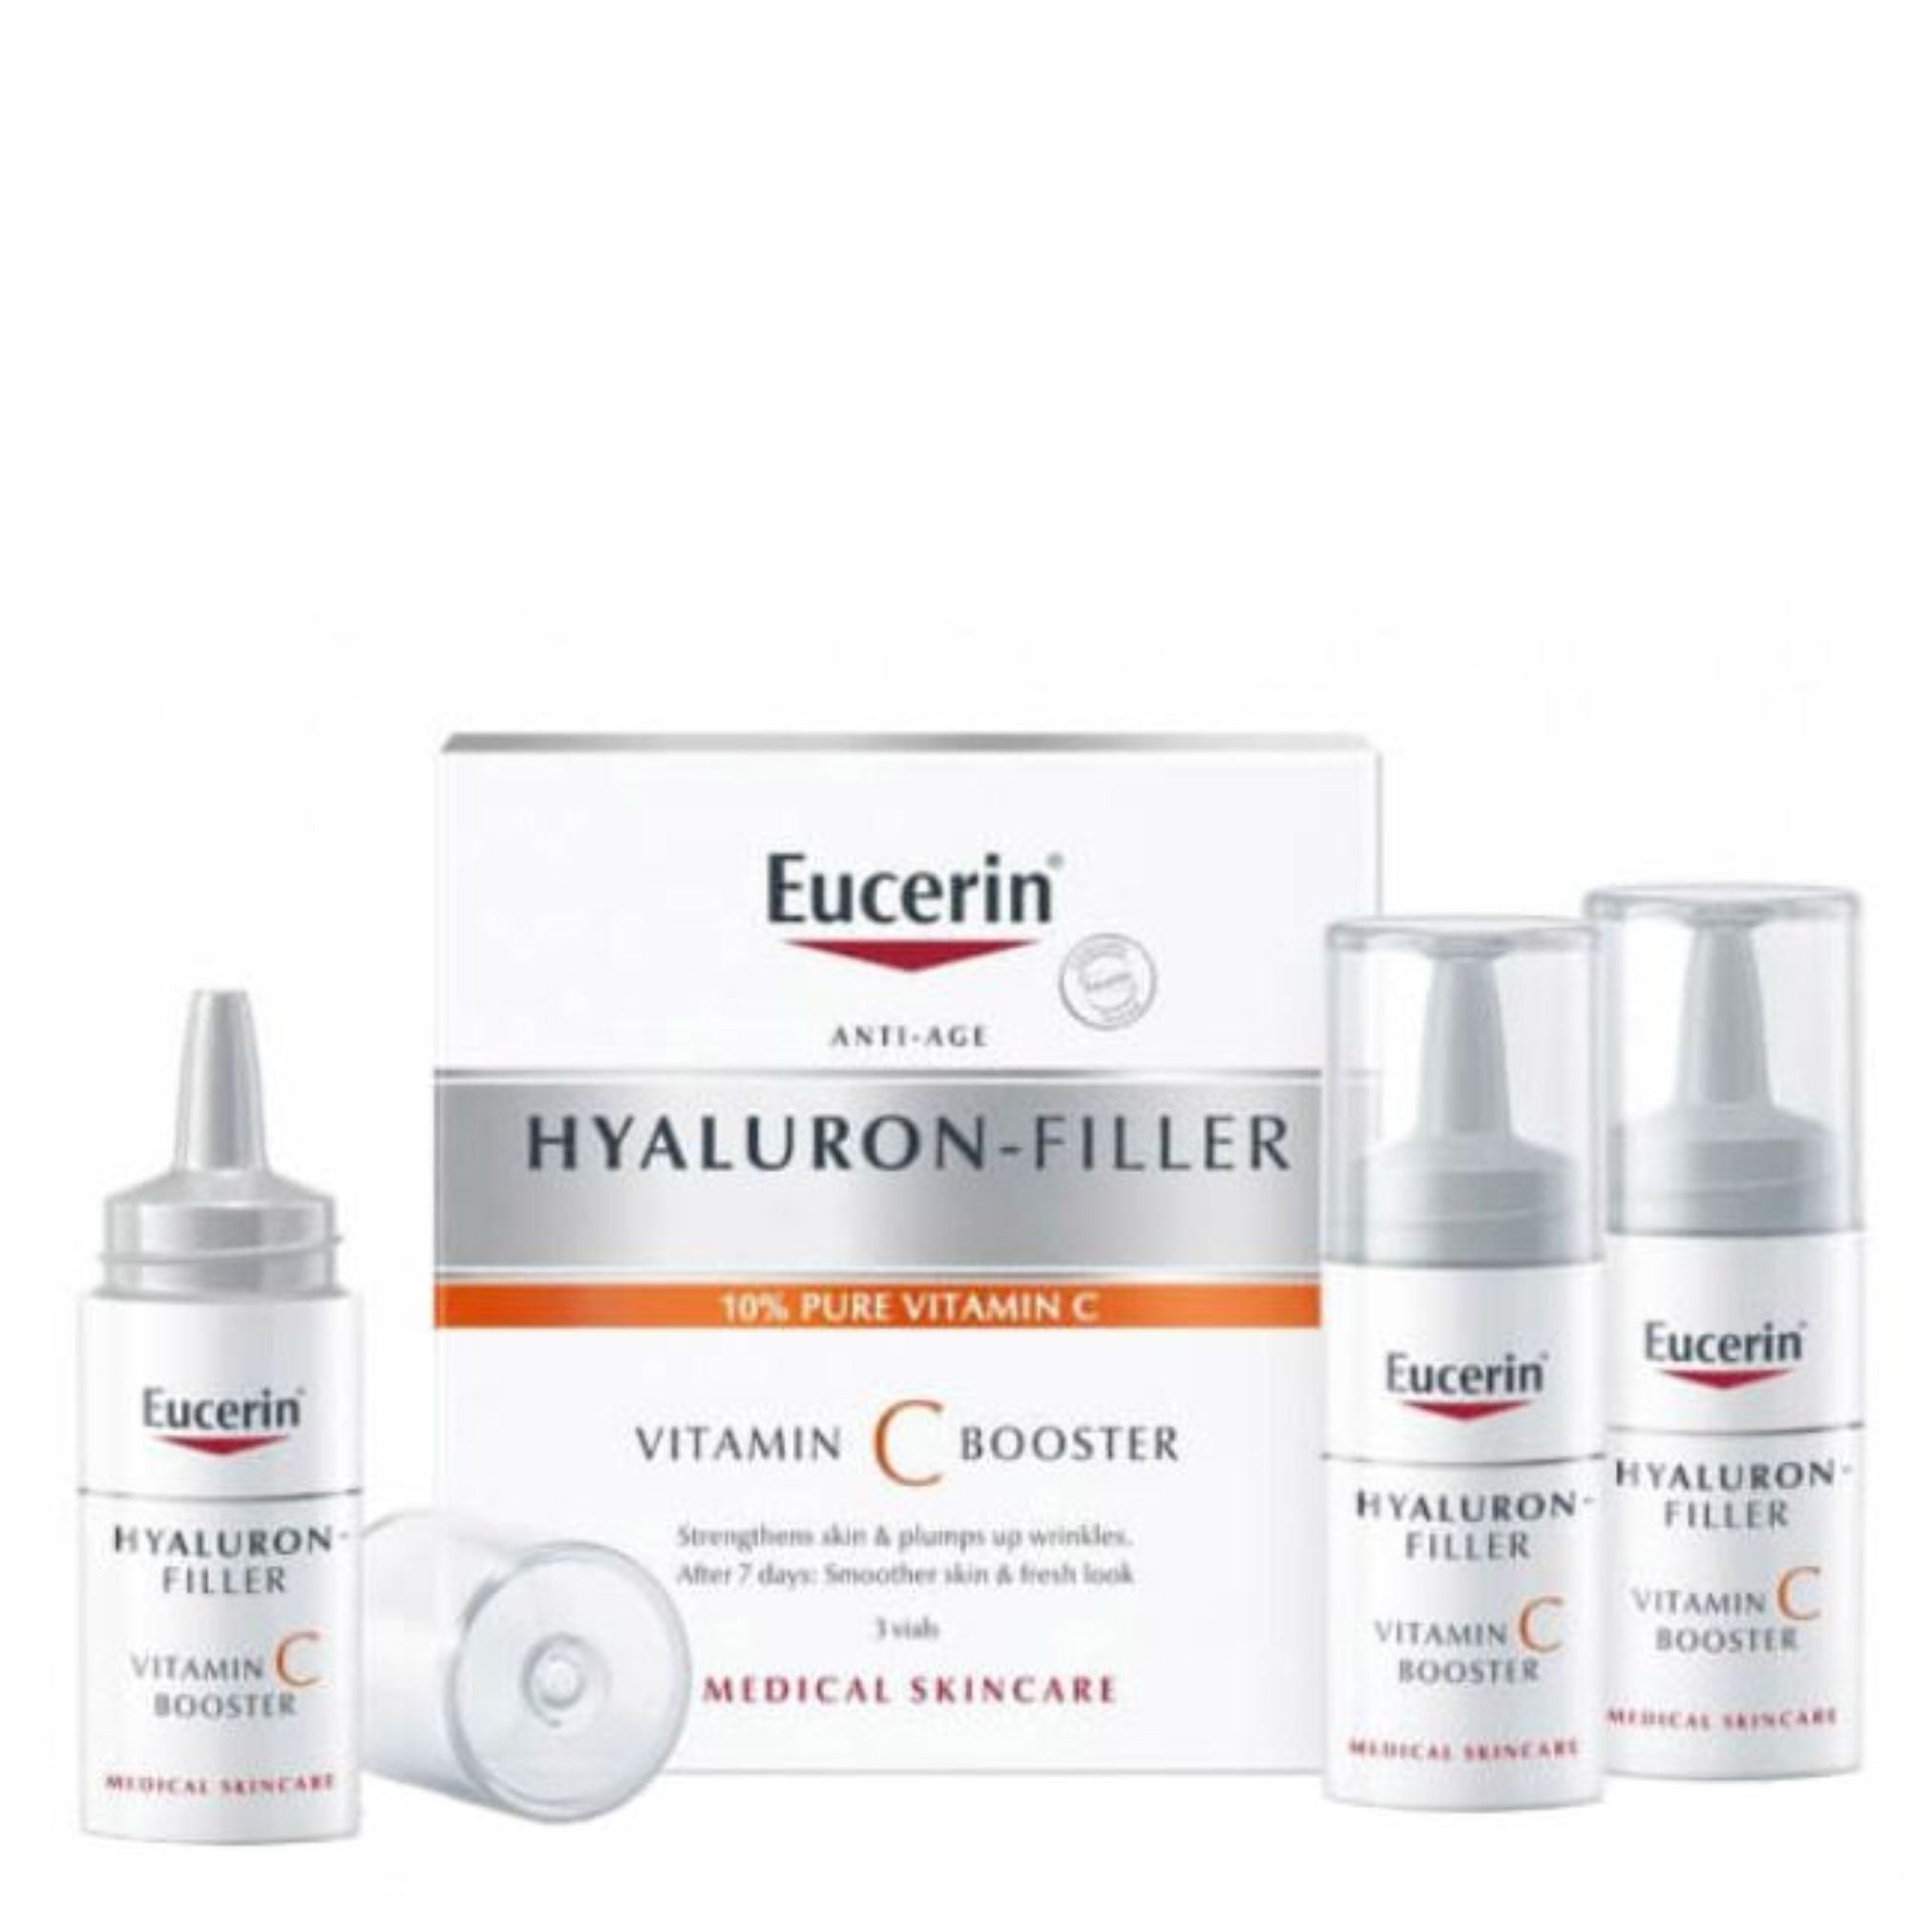 Eucerin Hyaluron-Filler 3x Effect Vitamina C Booster 3x8ml